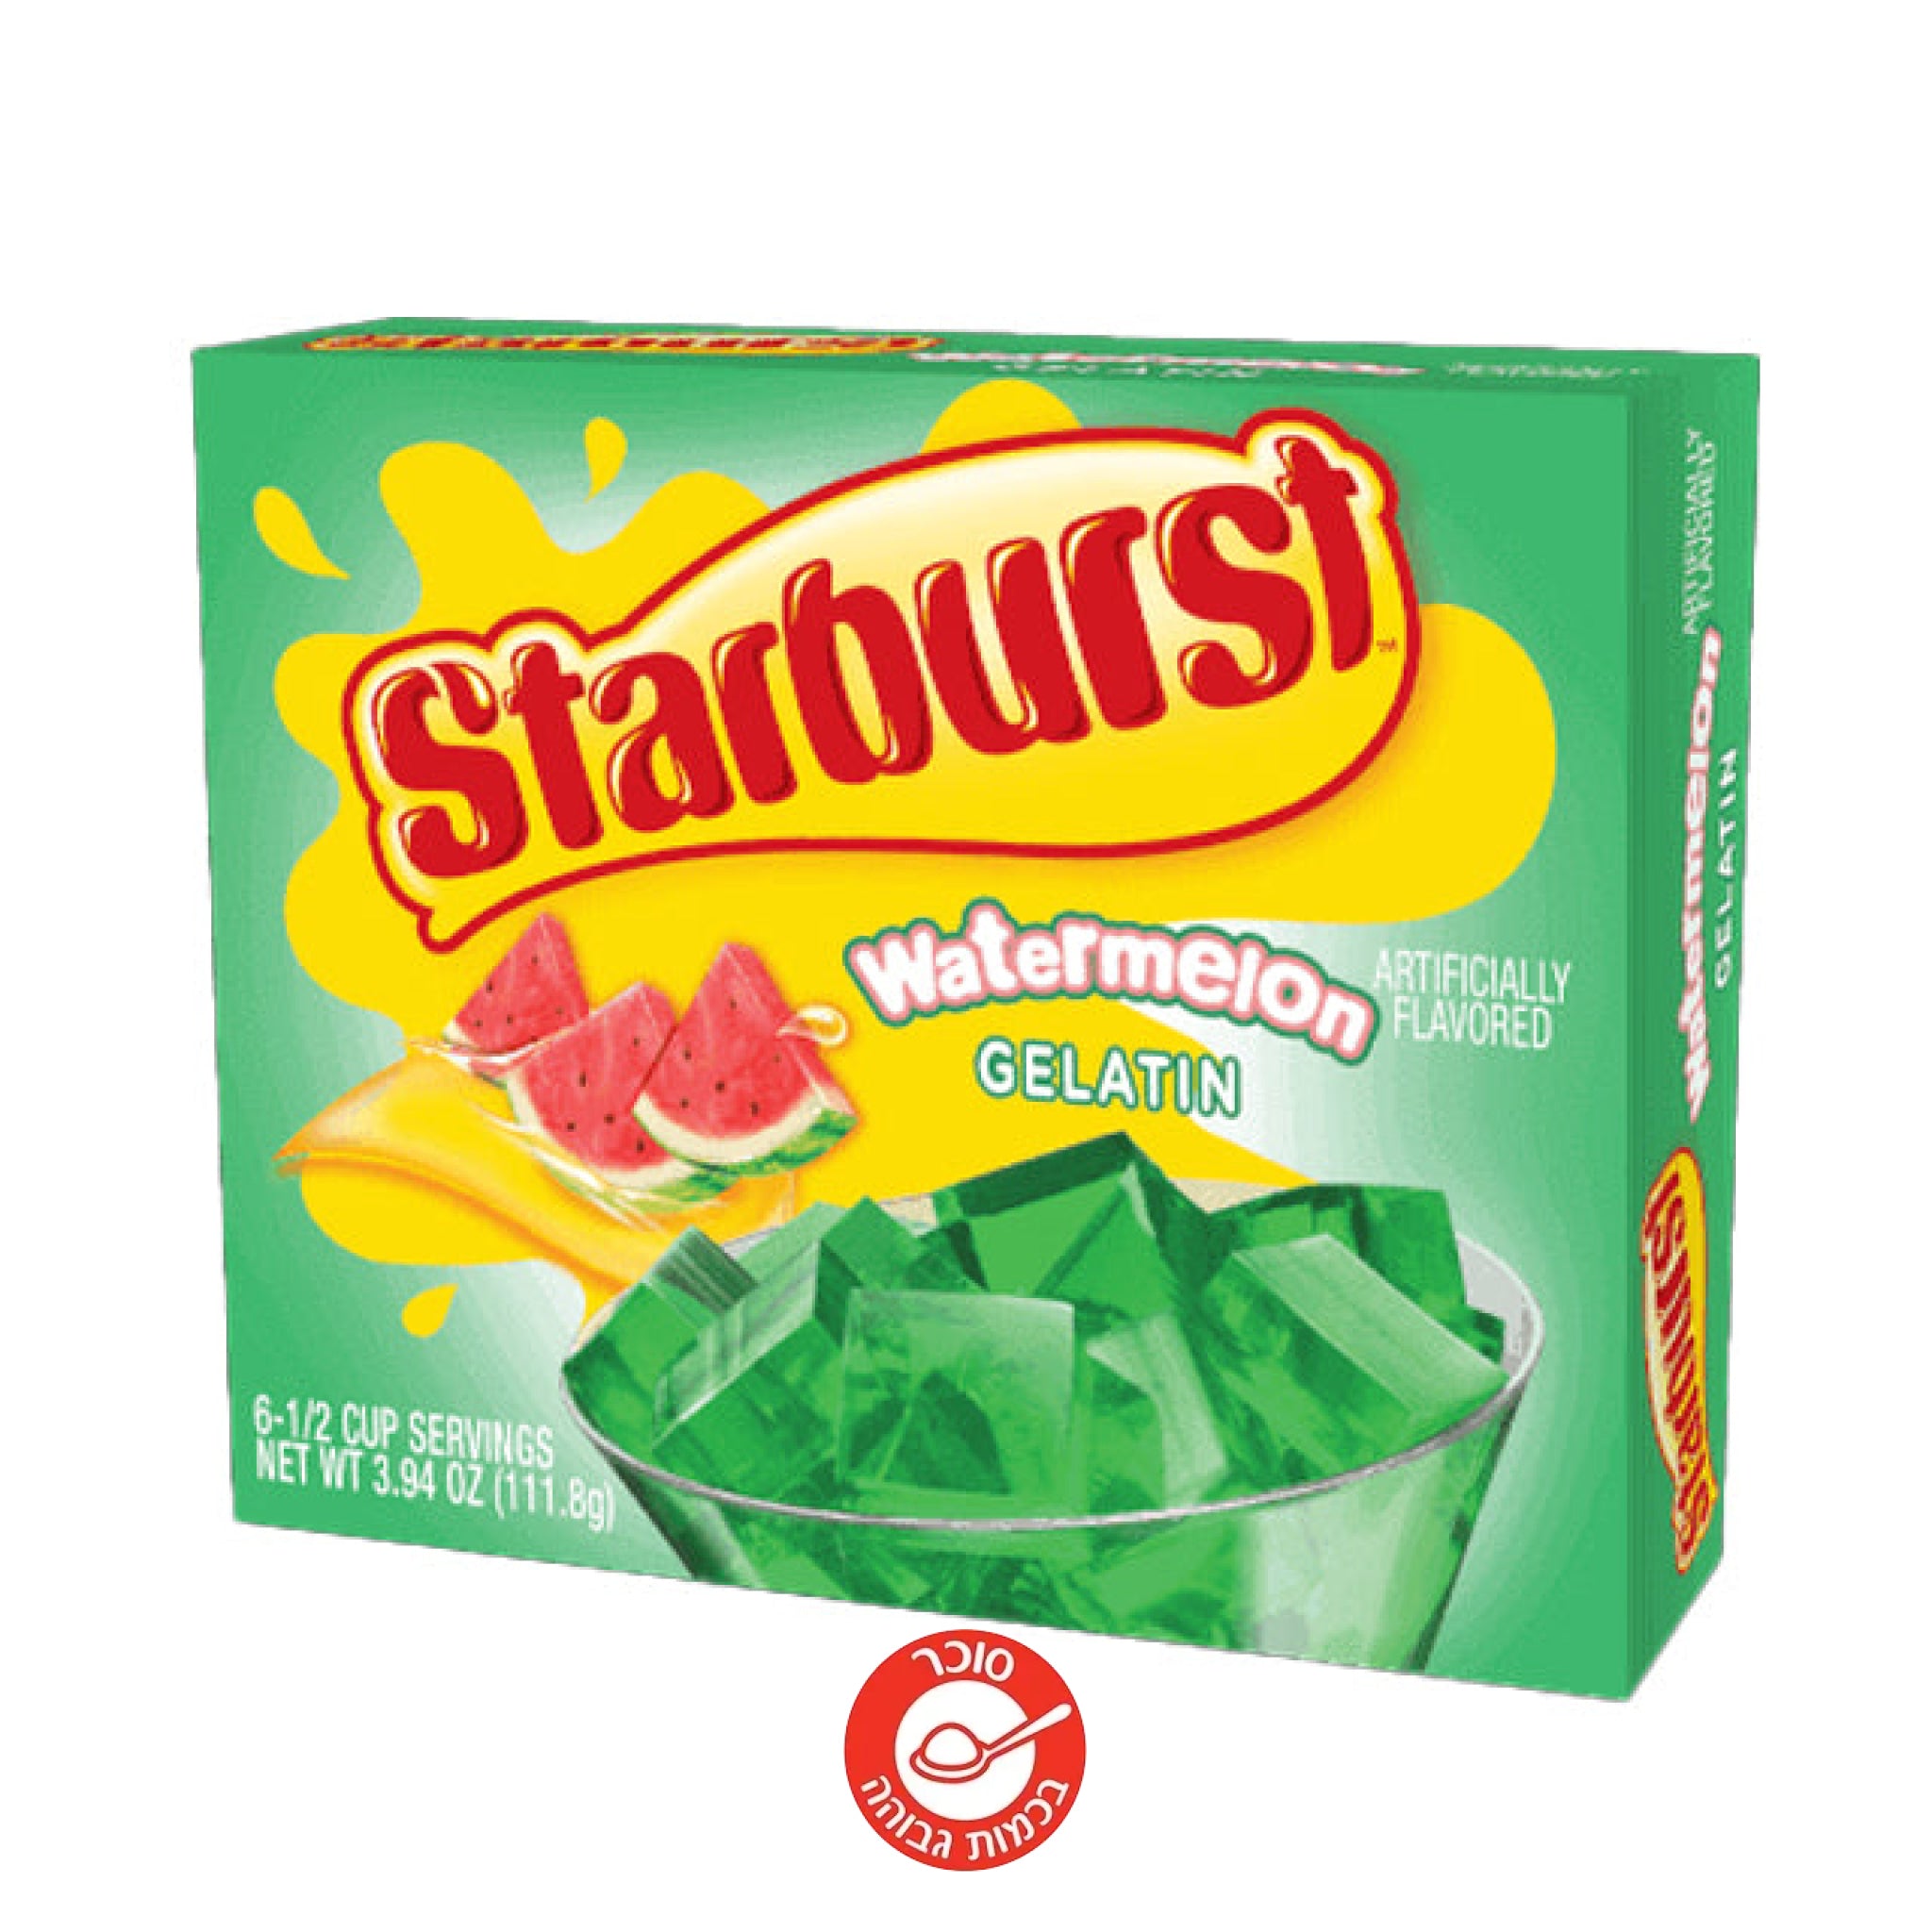 Starburst Watermelon Gelatin סטארבסט ג’לי להכנה בטעם אבטיח סוכריות